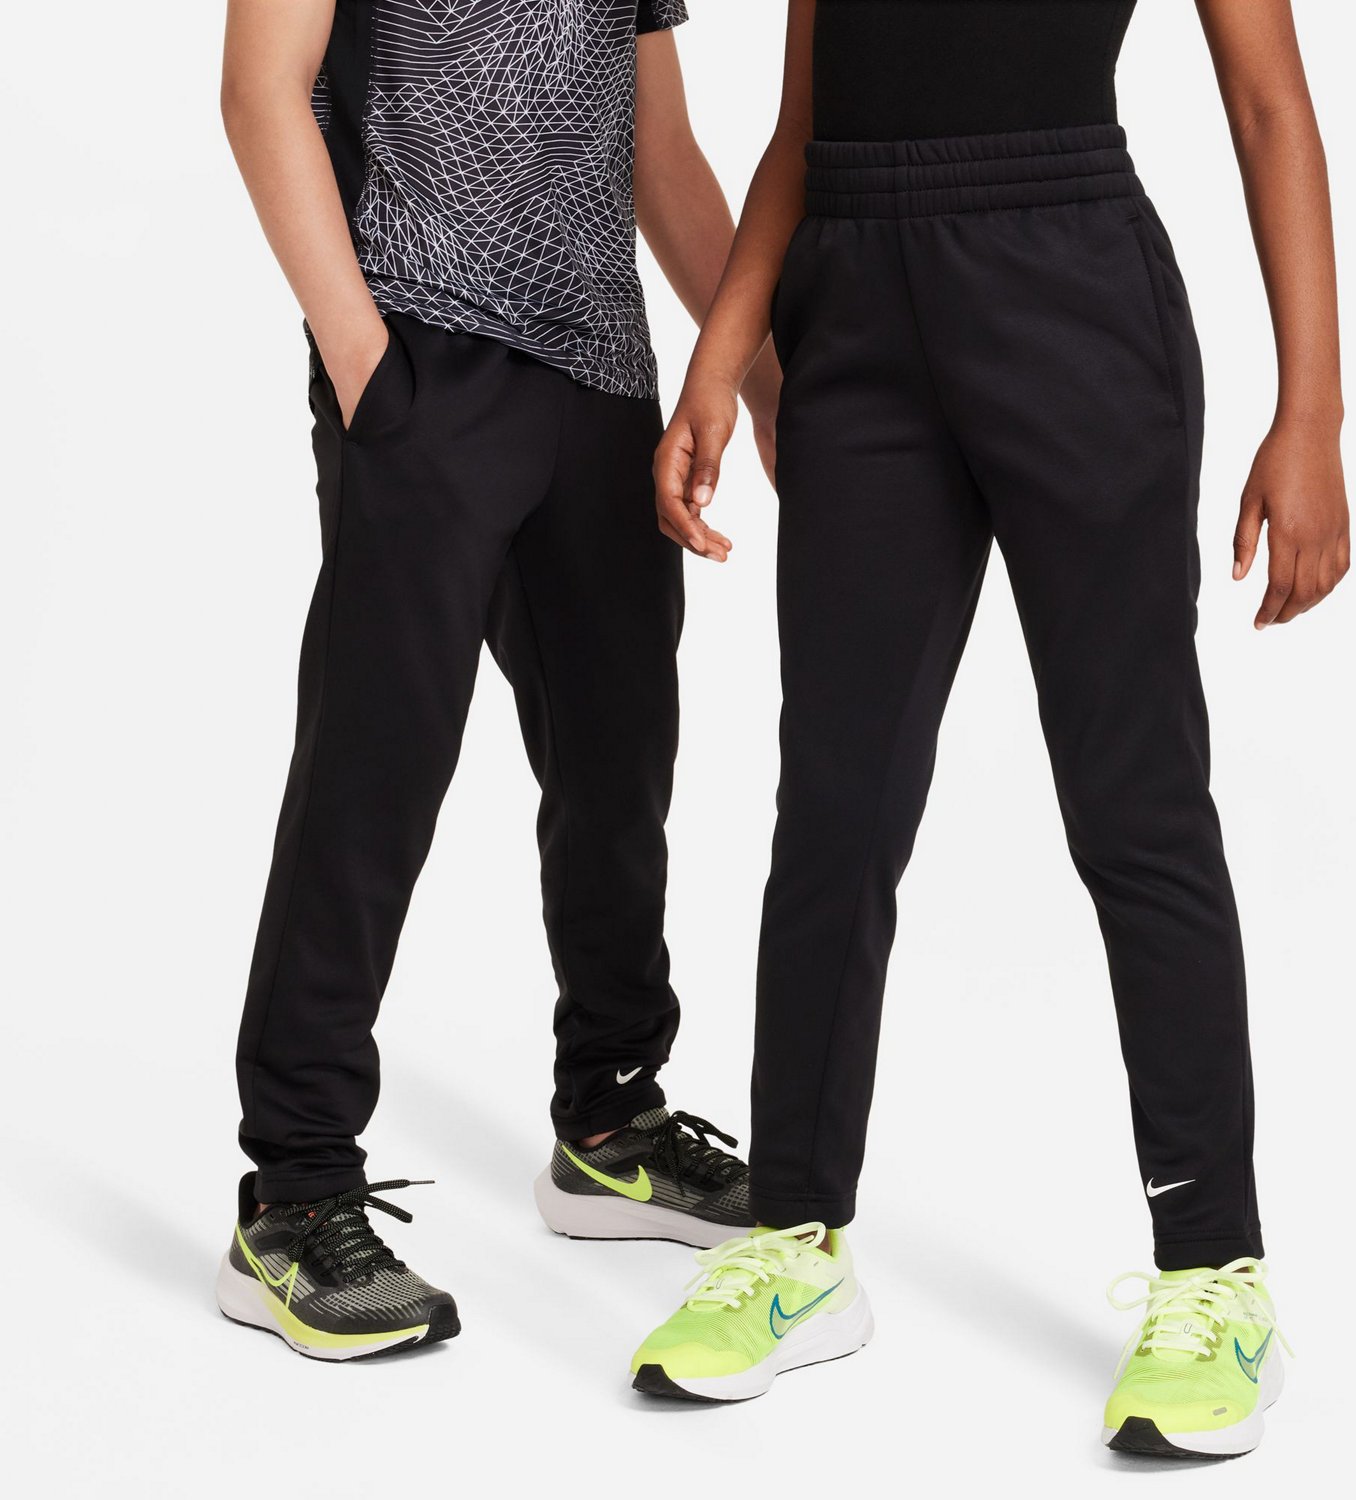 Guaranteed Match Joggers Price | Nike & Boys\' Sweatpants